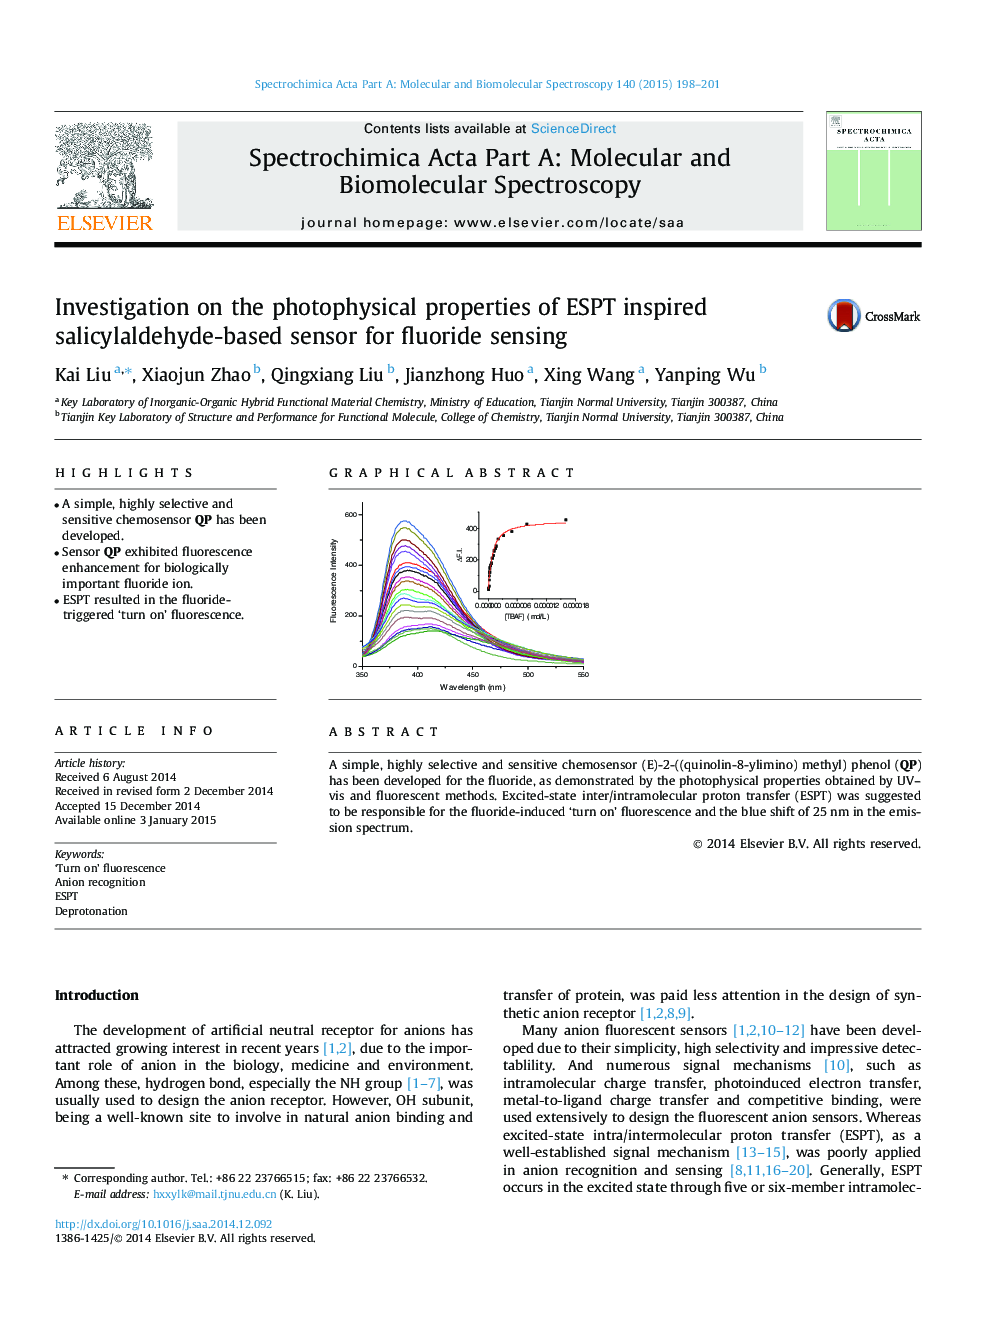 Investigation on the photophysical properties of ESPT inspired salicylaldehyde-based sensor for fluoride sensing